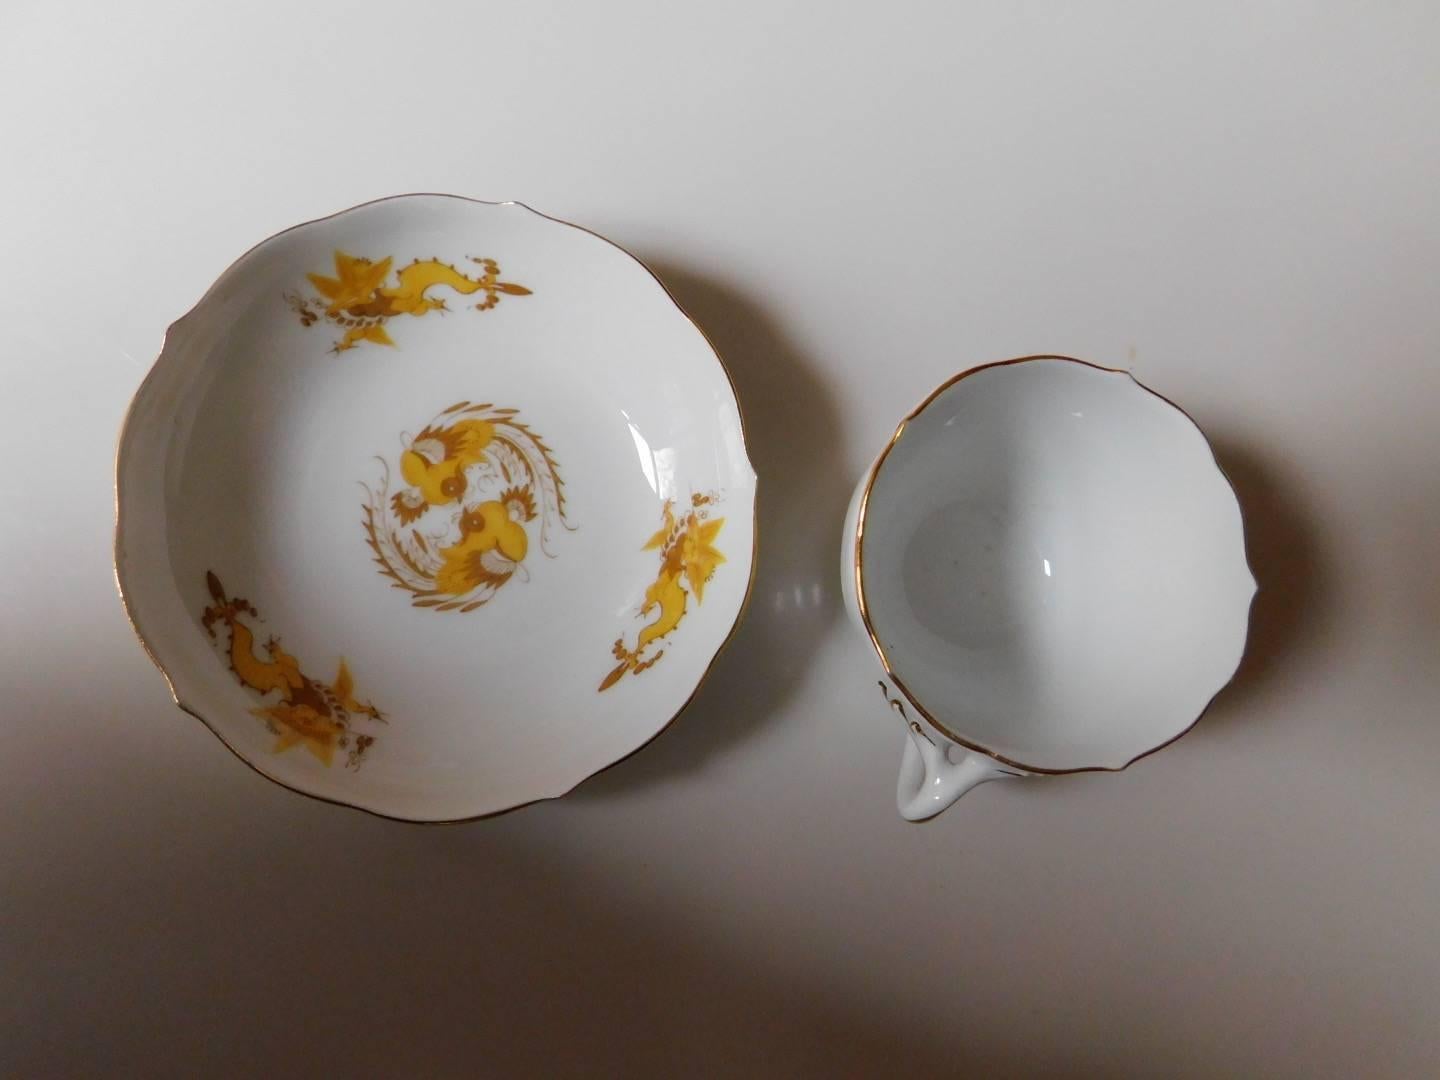 Meissen Porcelain golden dragon teacup and saucer.
Saucer measures: 4.25 inches diameter.